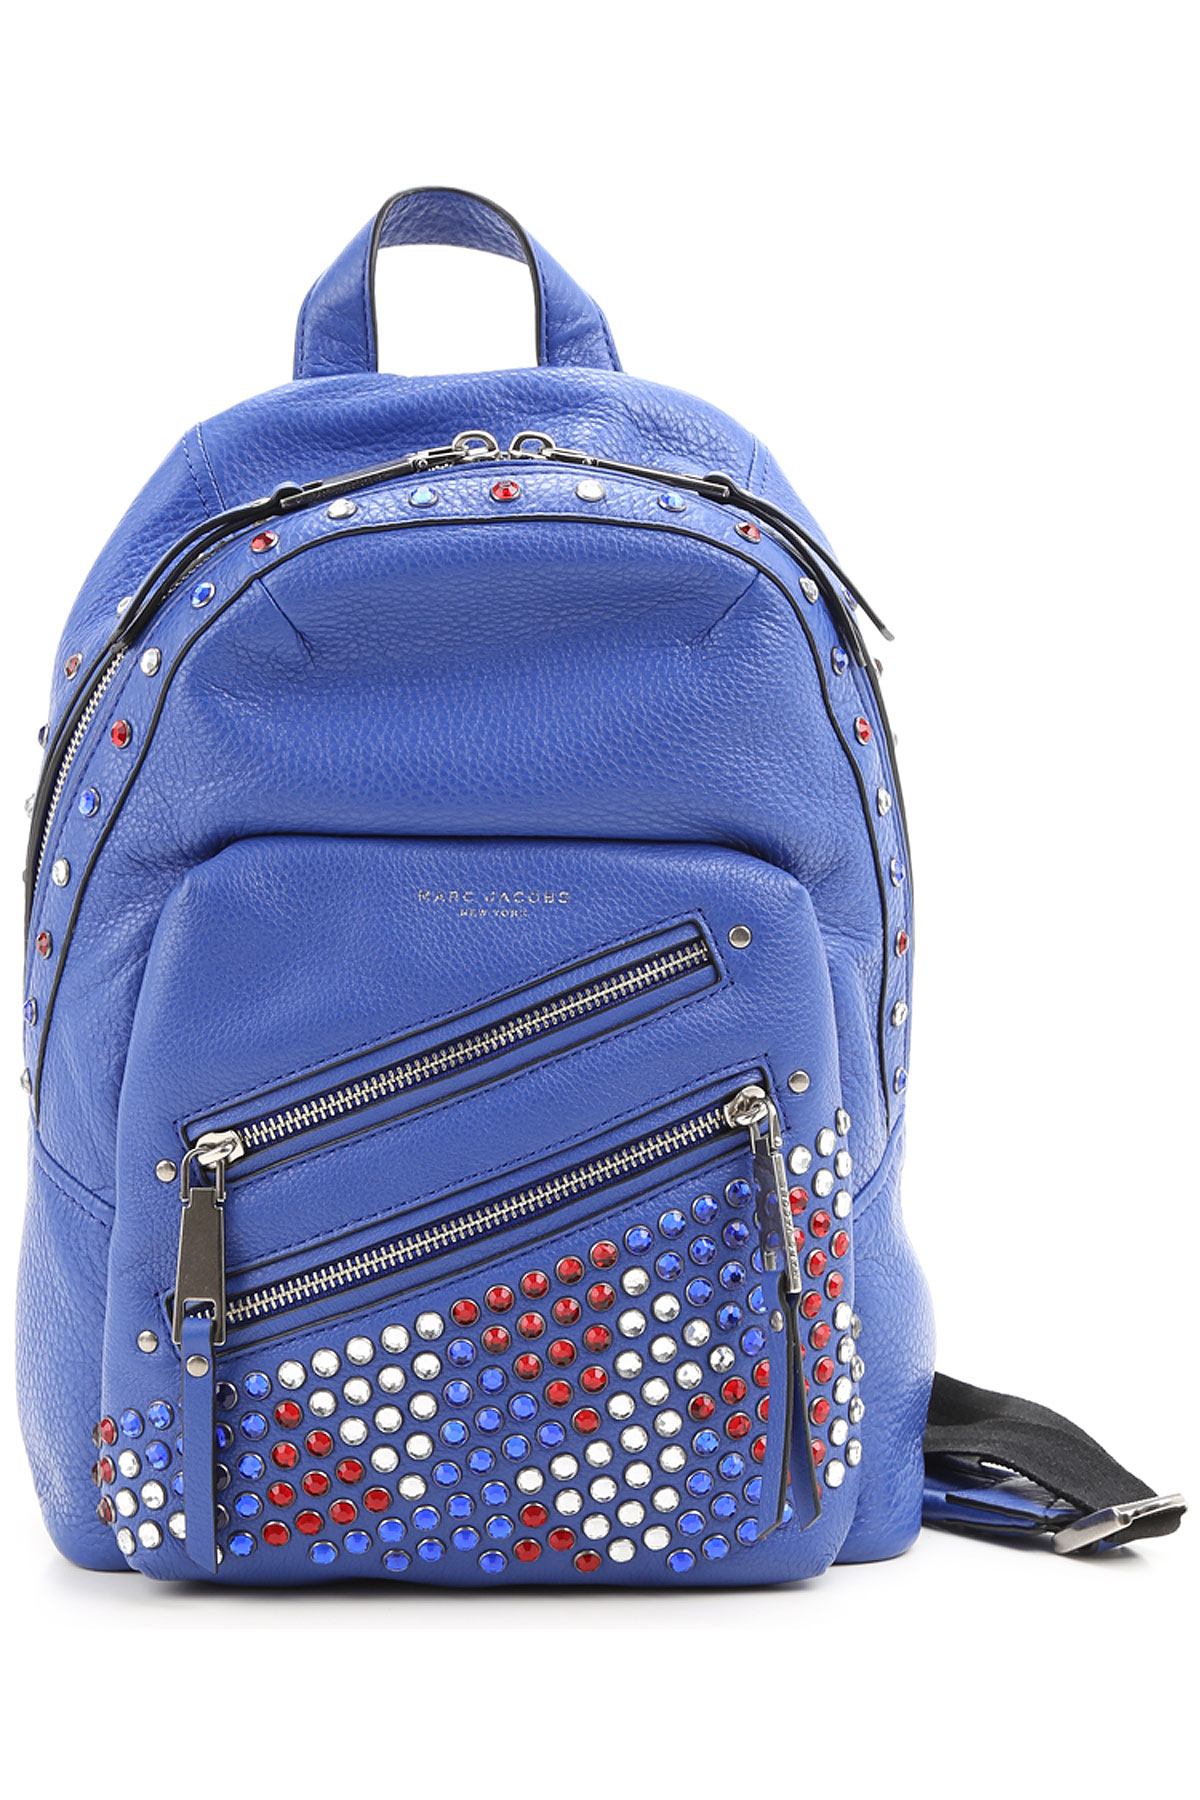 Handbags Marc Jacobs, Style code: m0008507-blu-